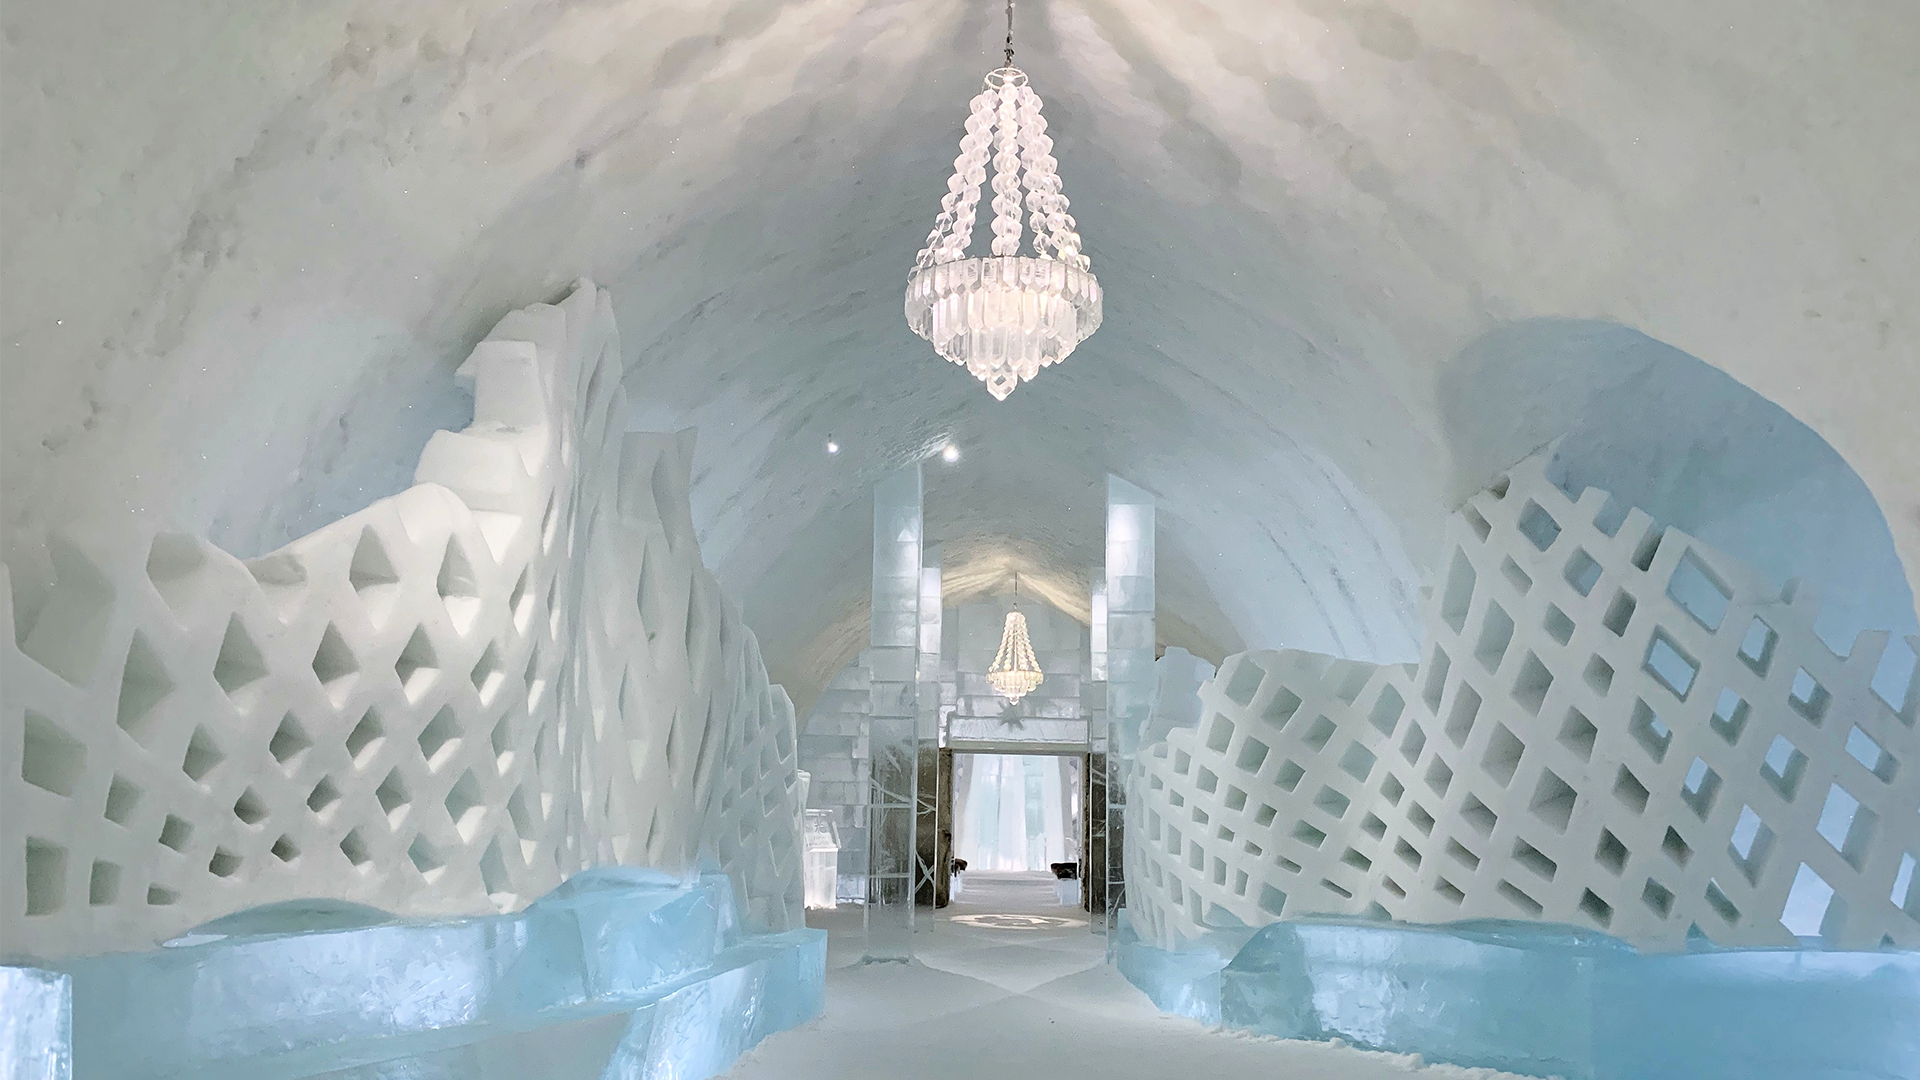 An ice hotel interior